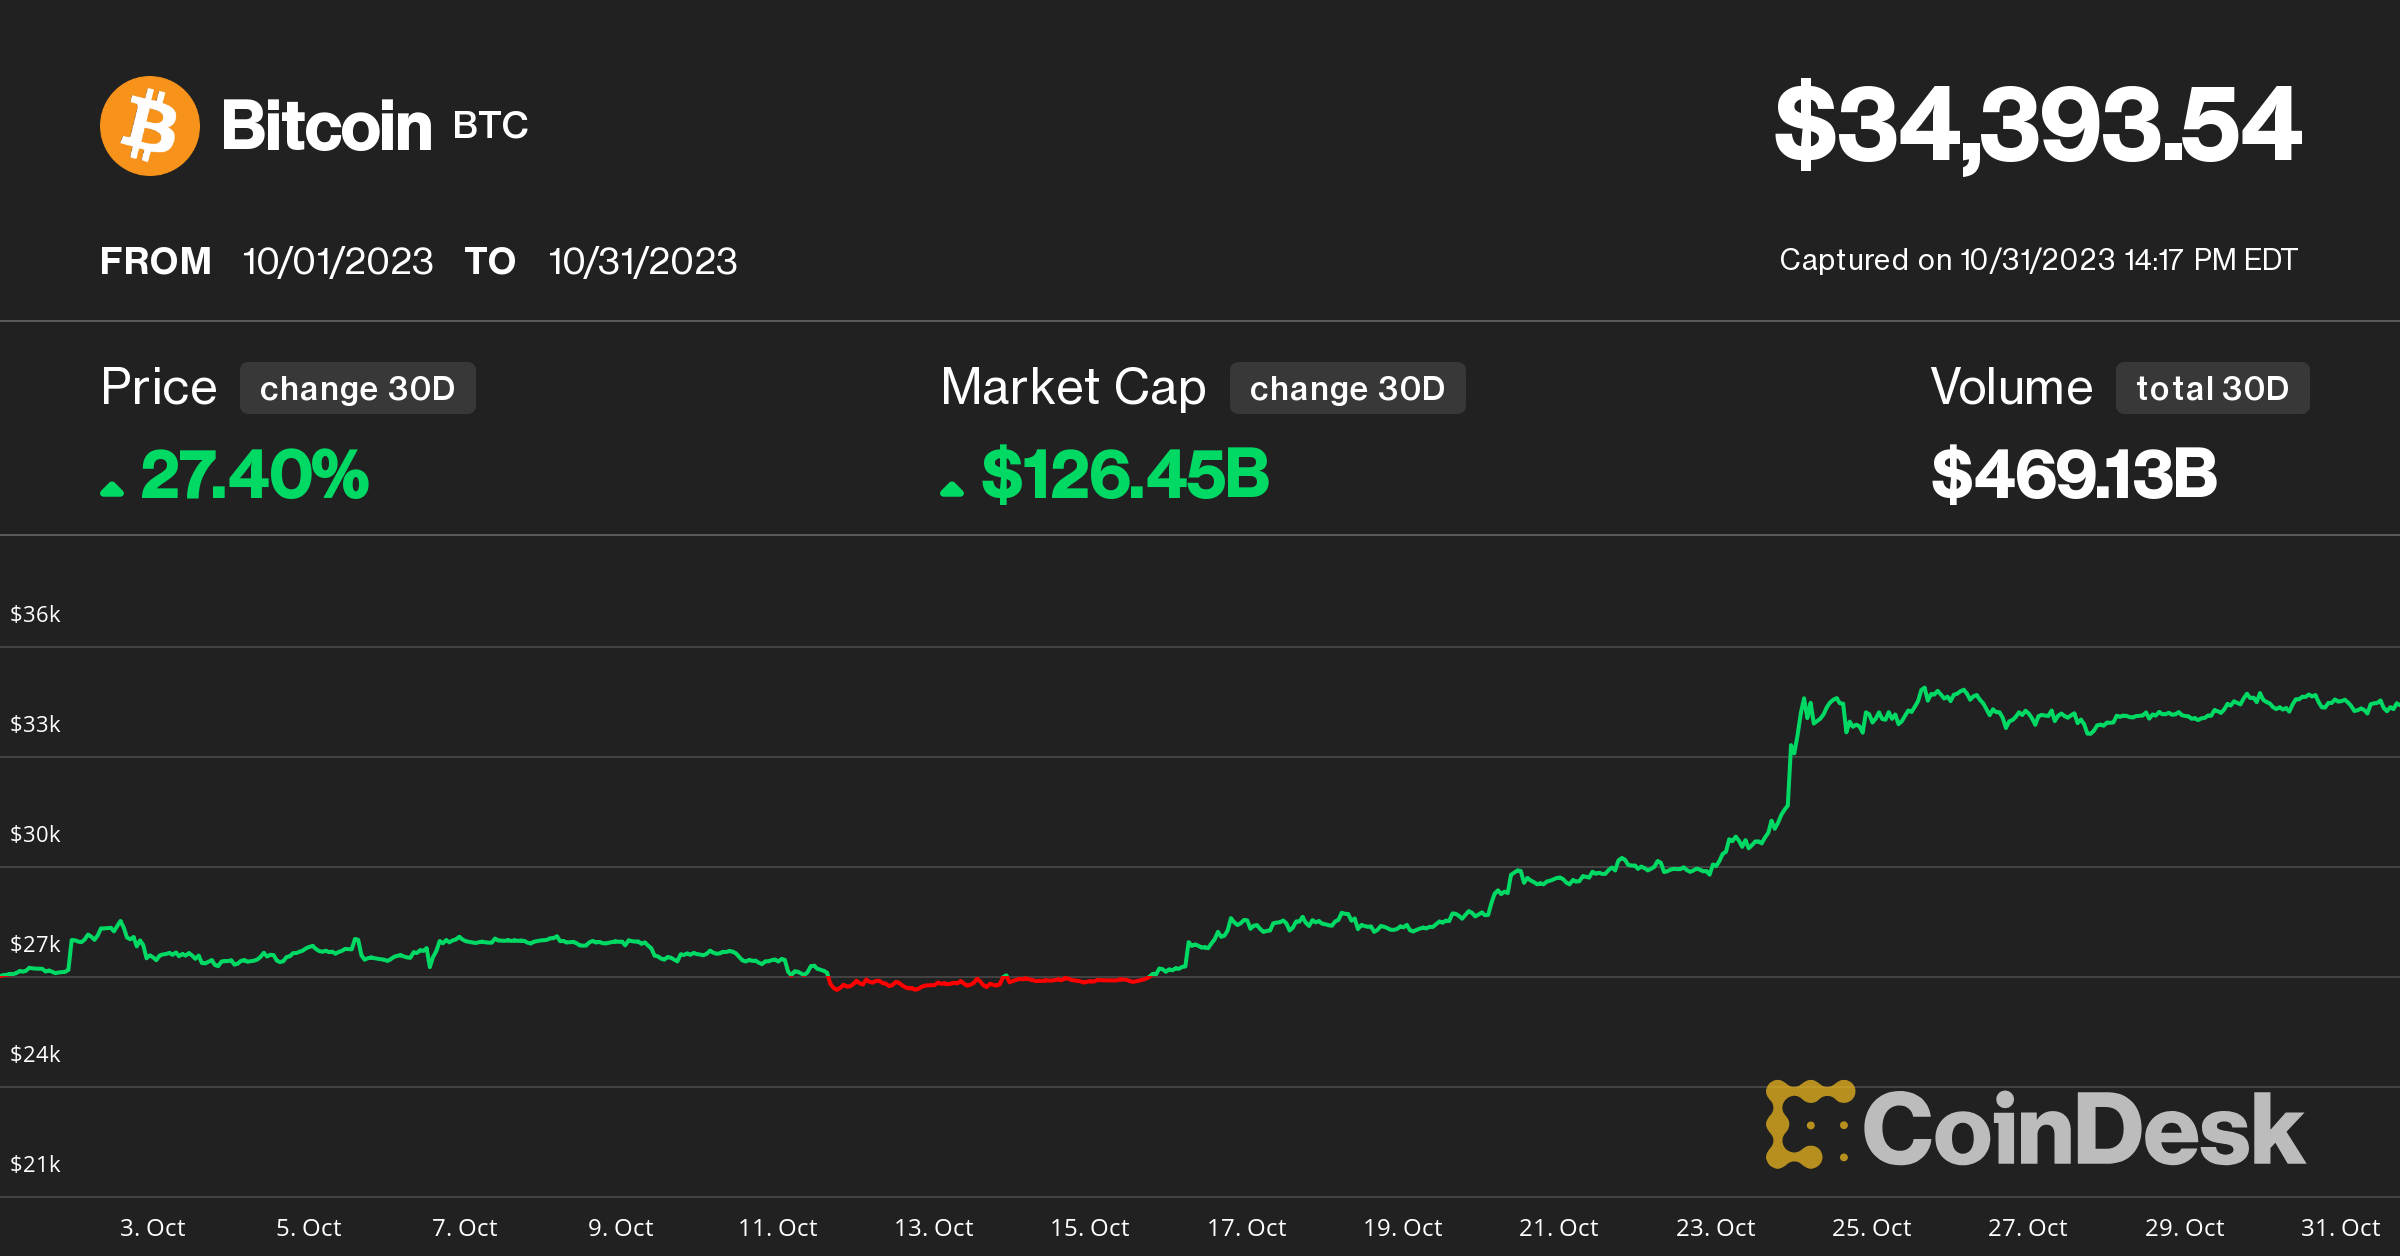 Crypto investors panic amid digital coin, bitcoin crash